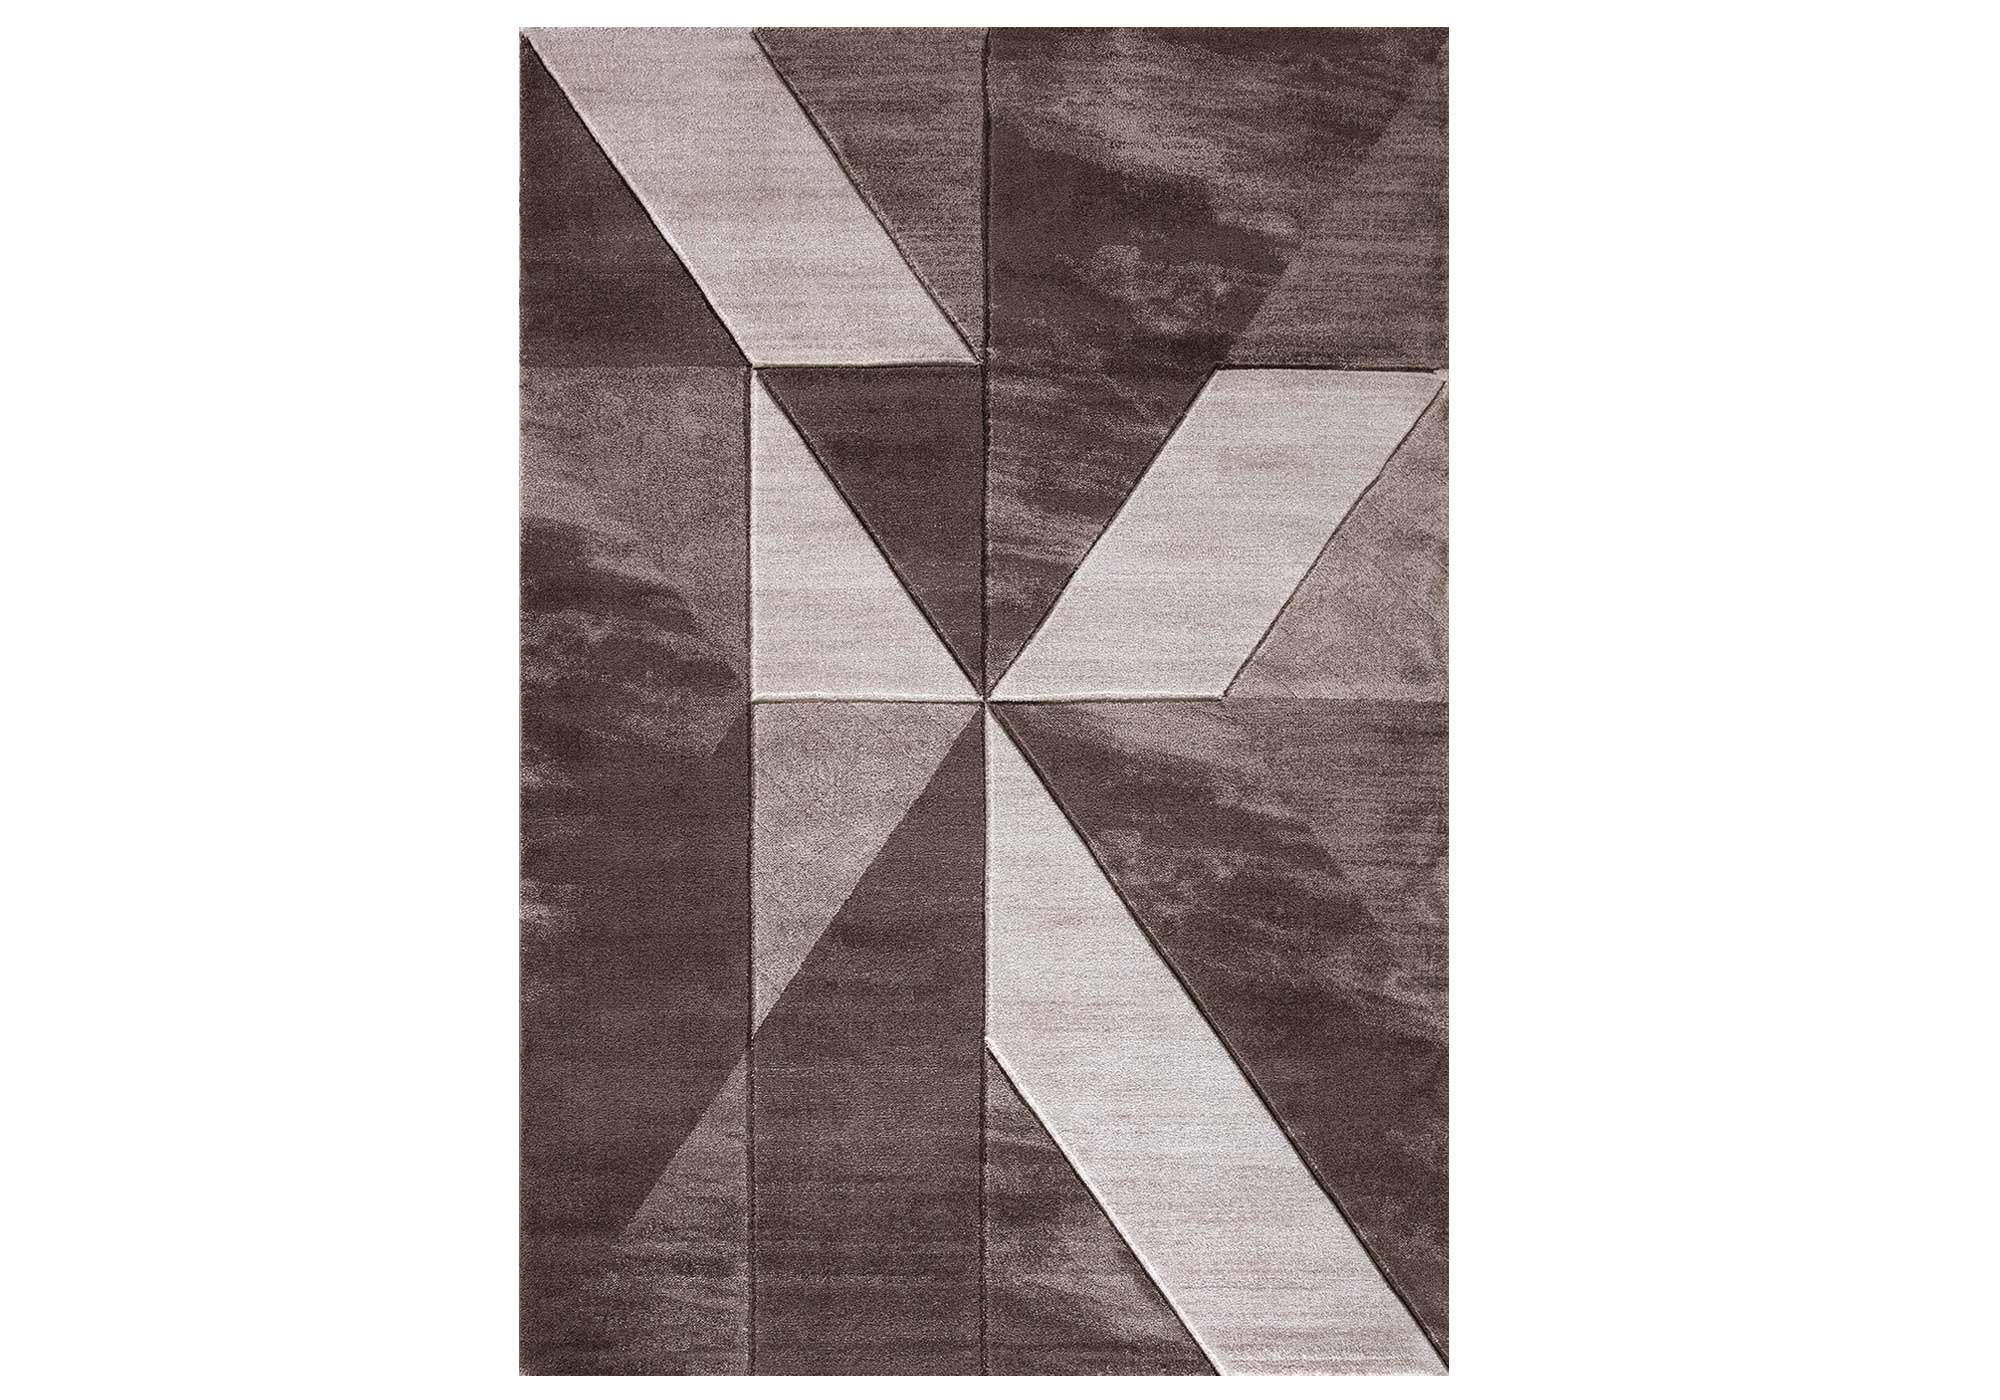 Festival Teppich 160 x 230 cm - beige - 11 mm Höhe - Konturenschnitt - Relax 210